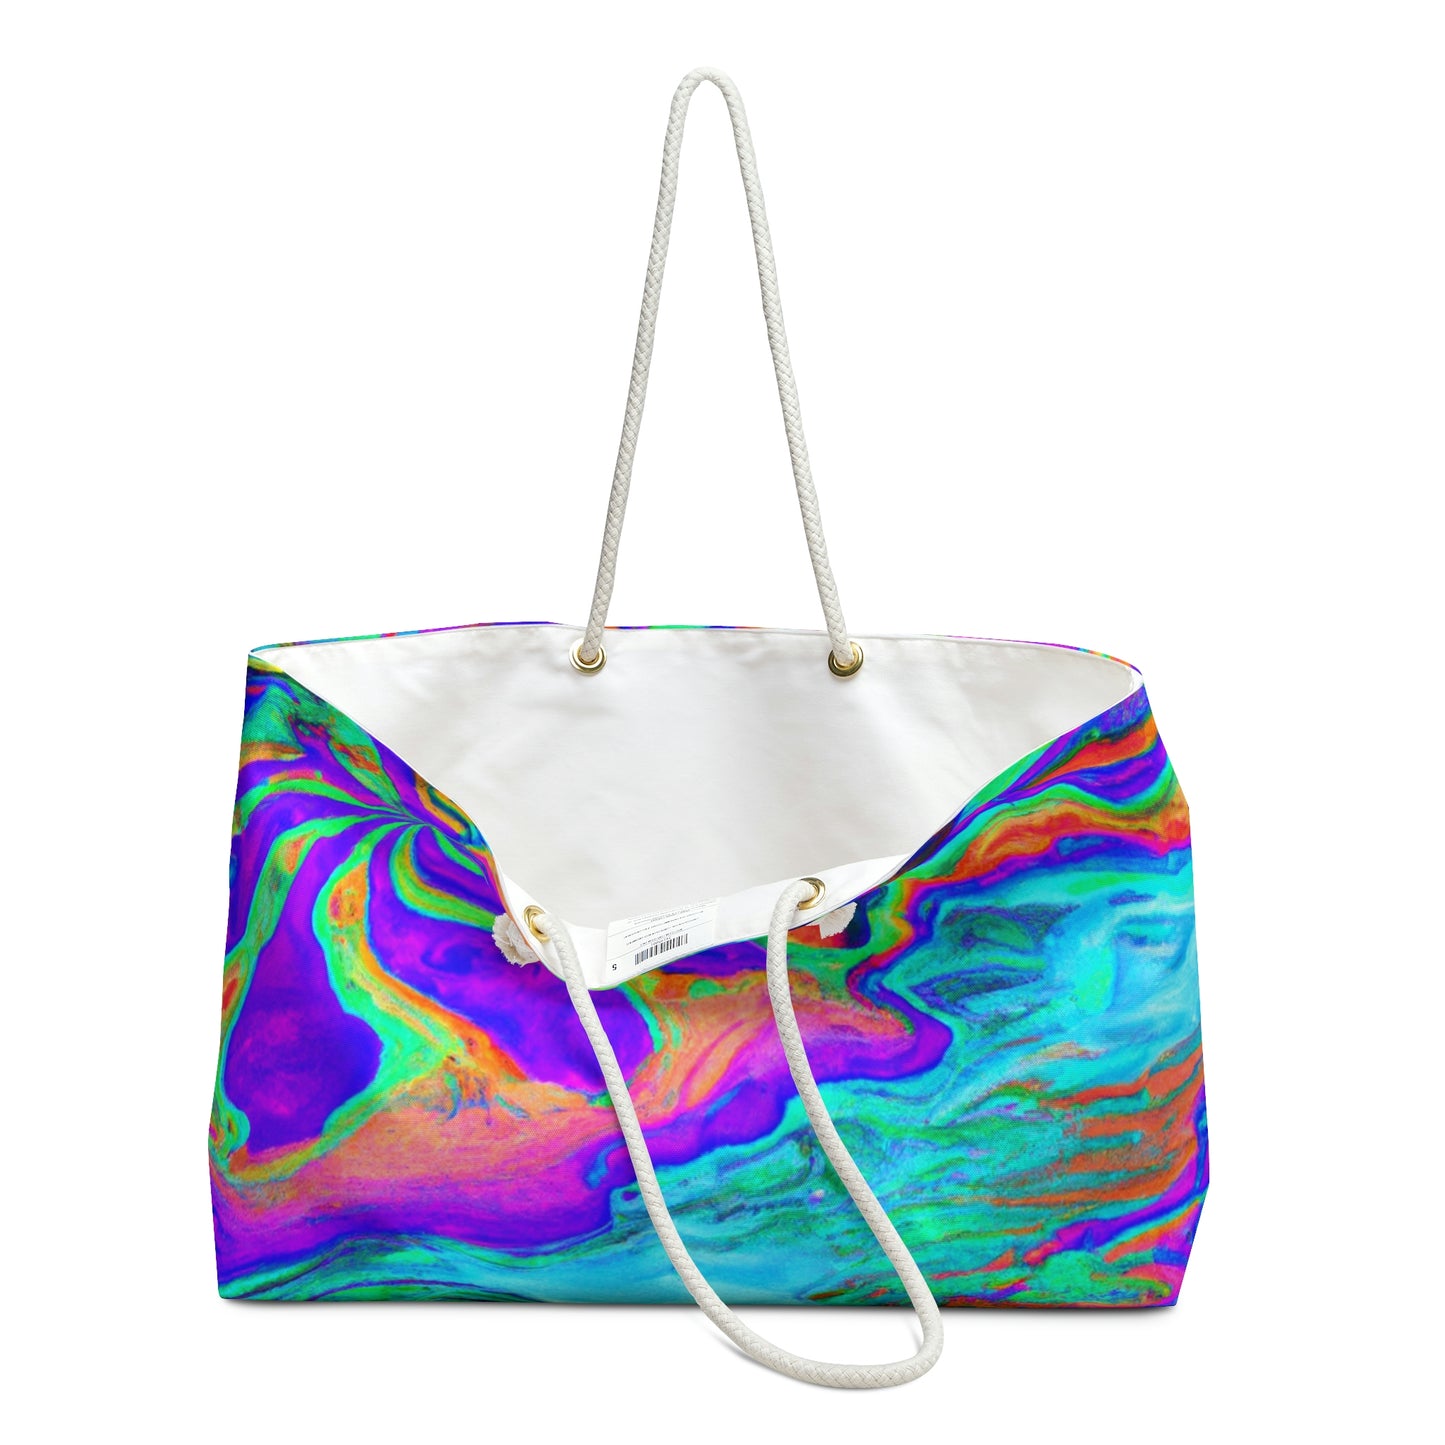 Splash-alicious Sack! - Beach Bag